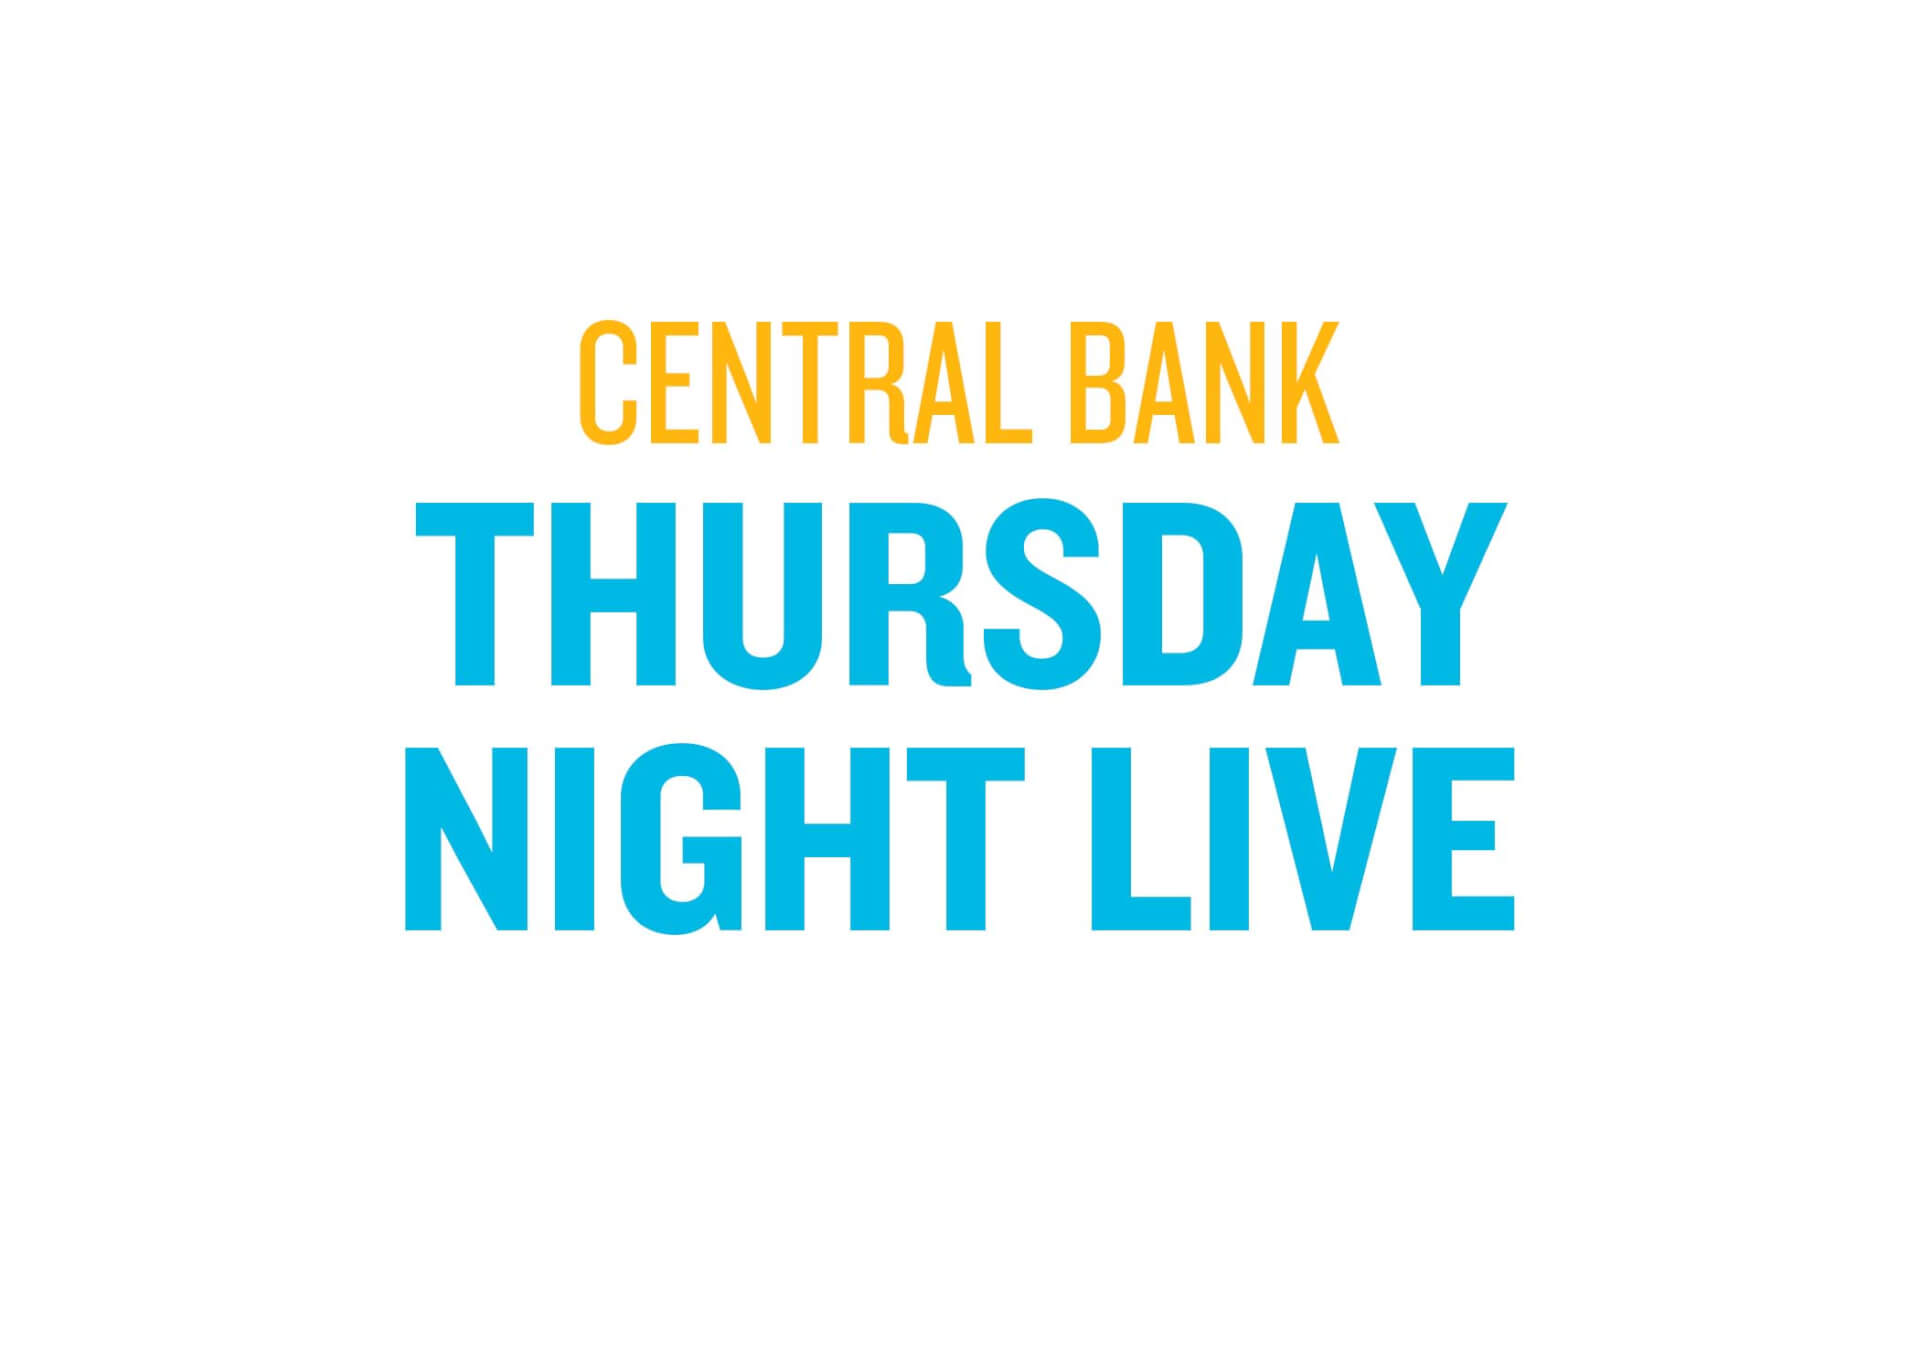 Central Bank Thursday Night Live